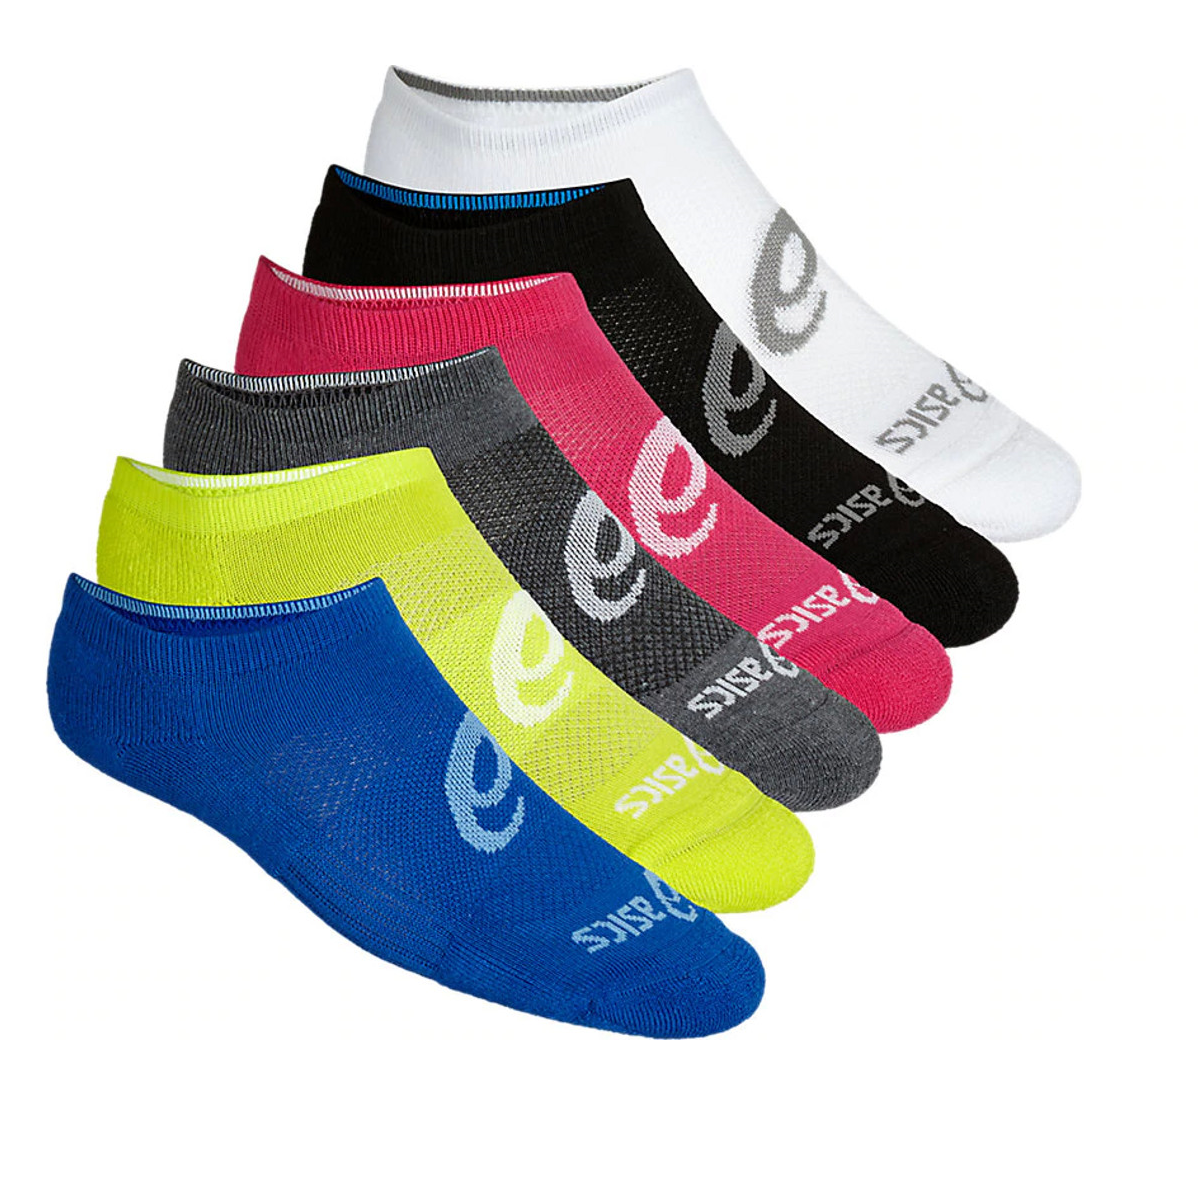 Asics Sportsocken Herren Sneaker Laufsocken 6 / 12 Paar Socken atmungsaktiv  | eBay